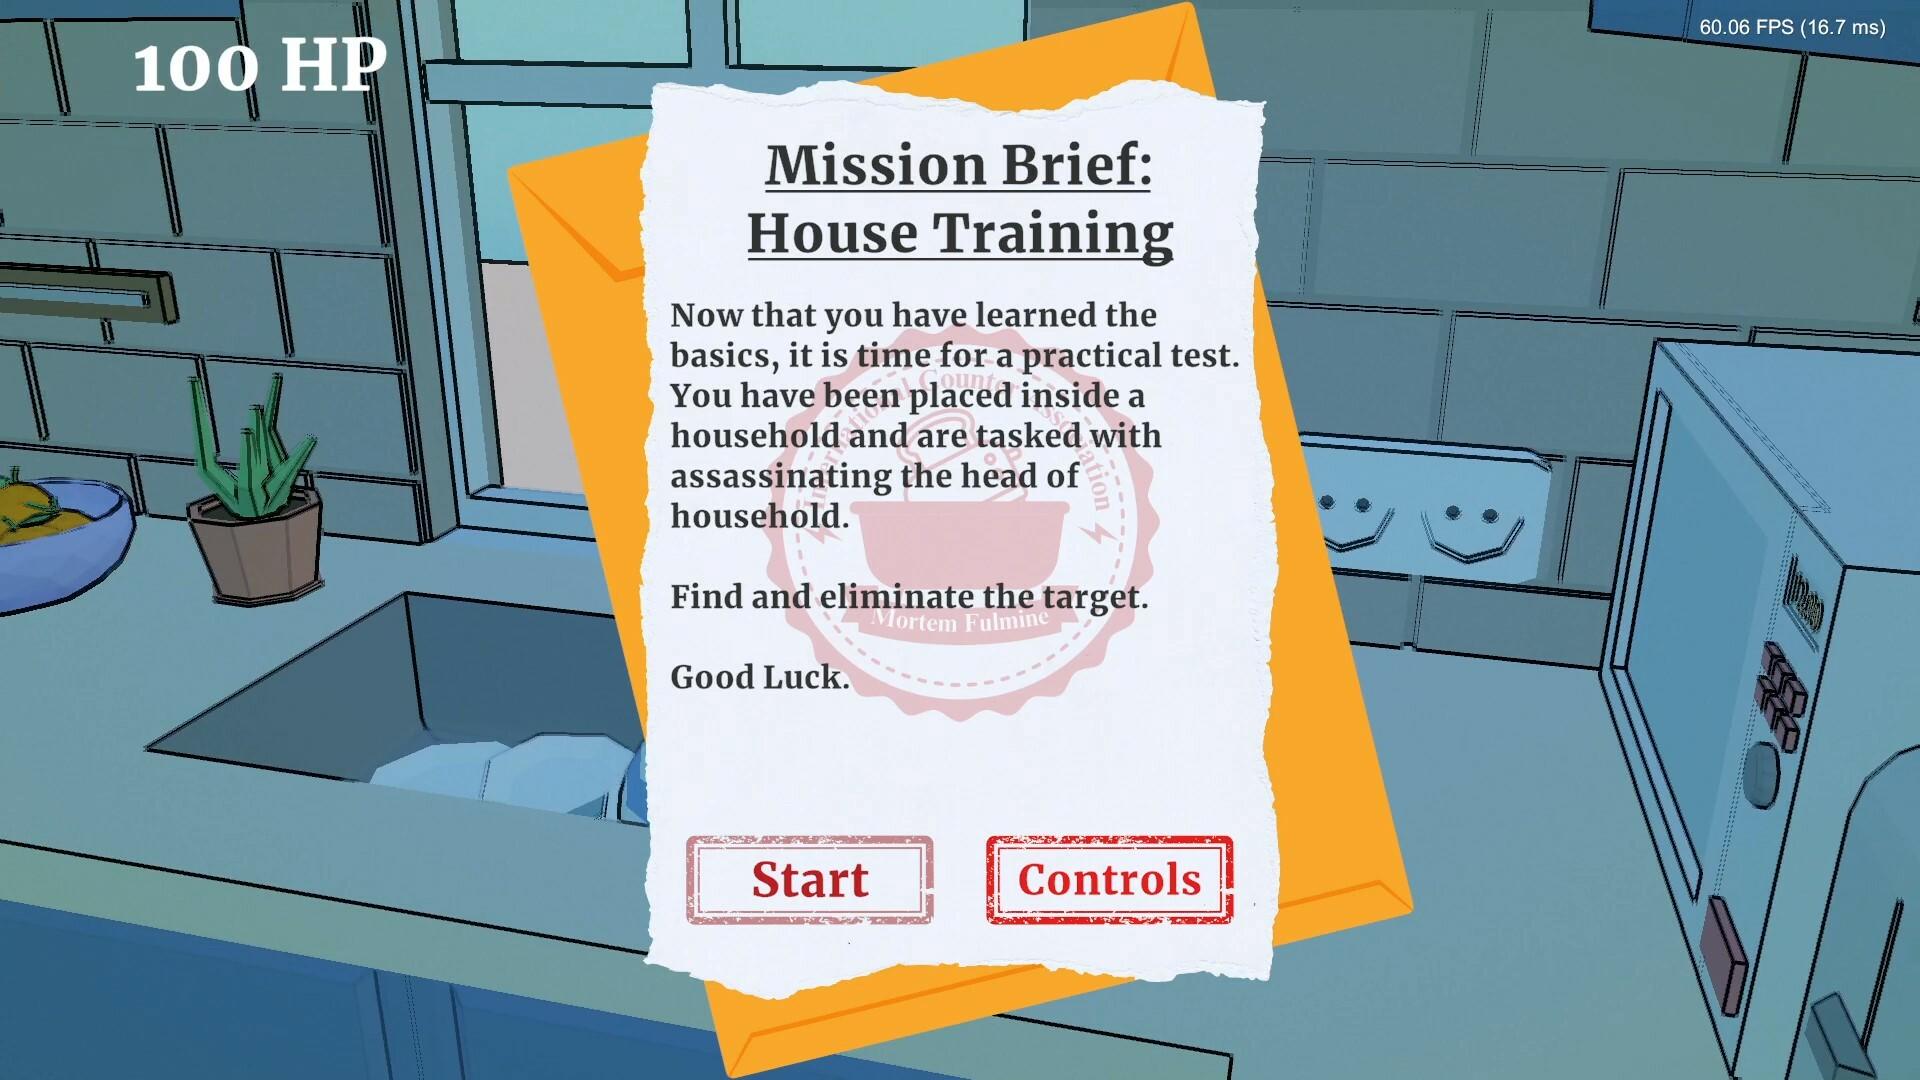 Screenshot of Toastercide